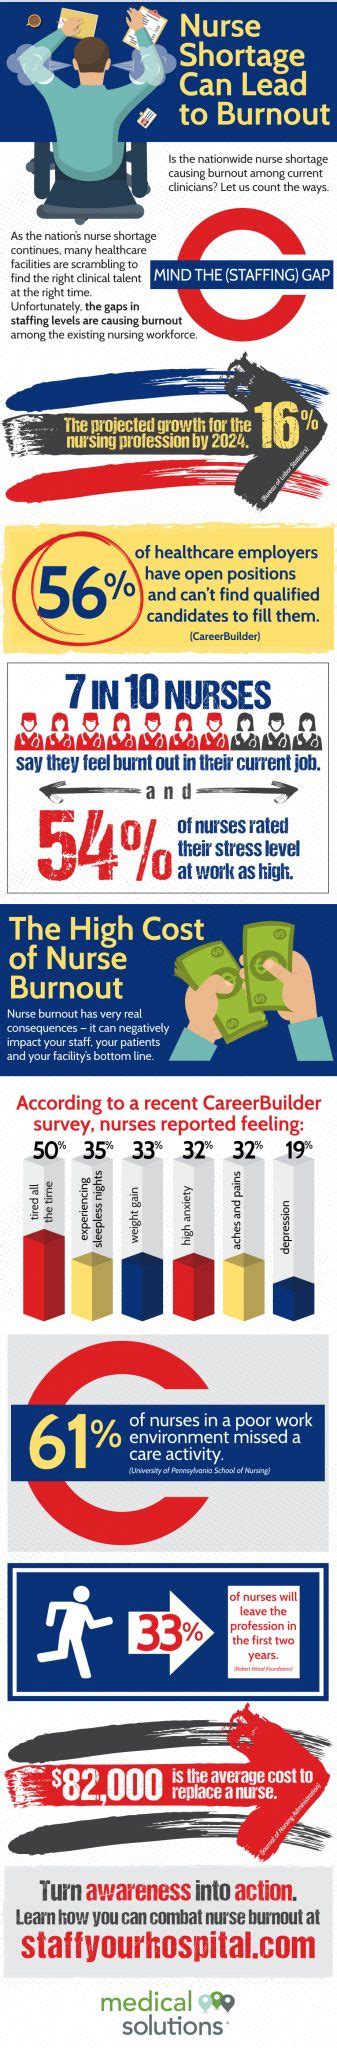 nurse burnout on the rise [infographic]